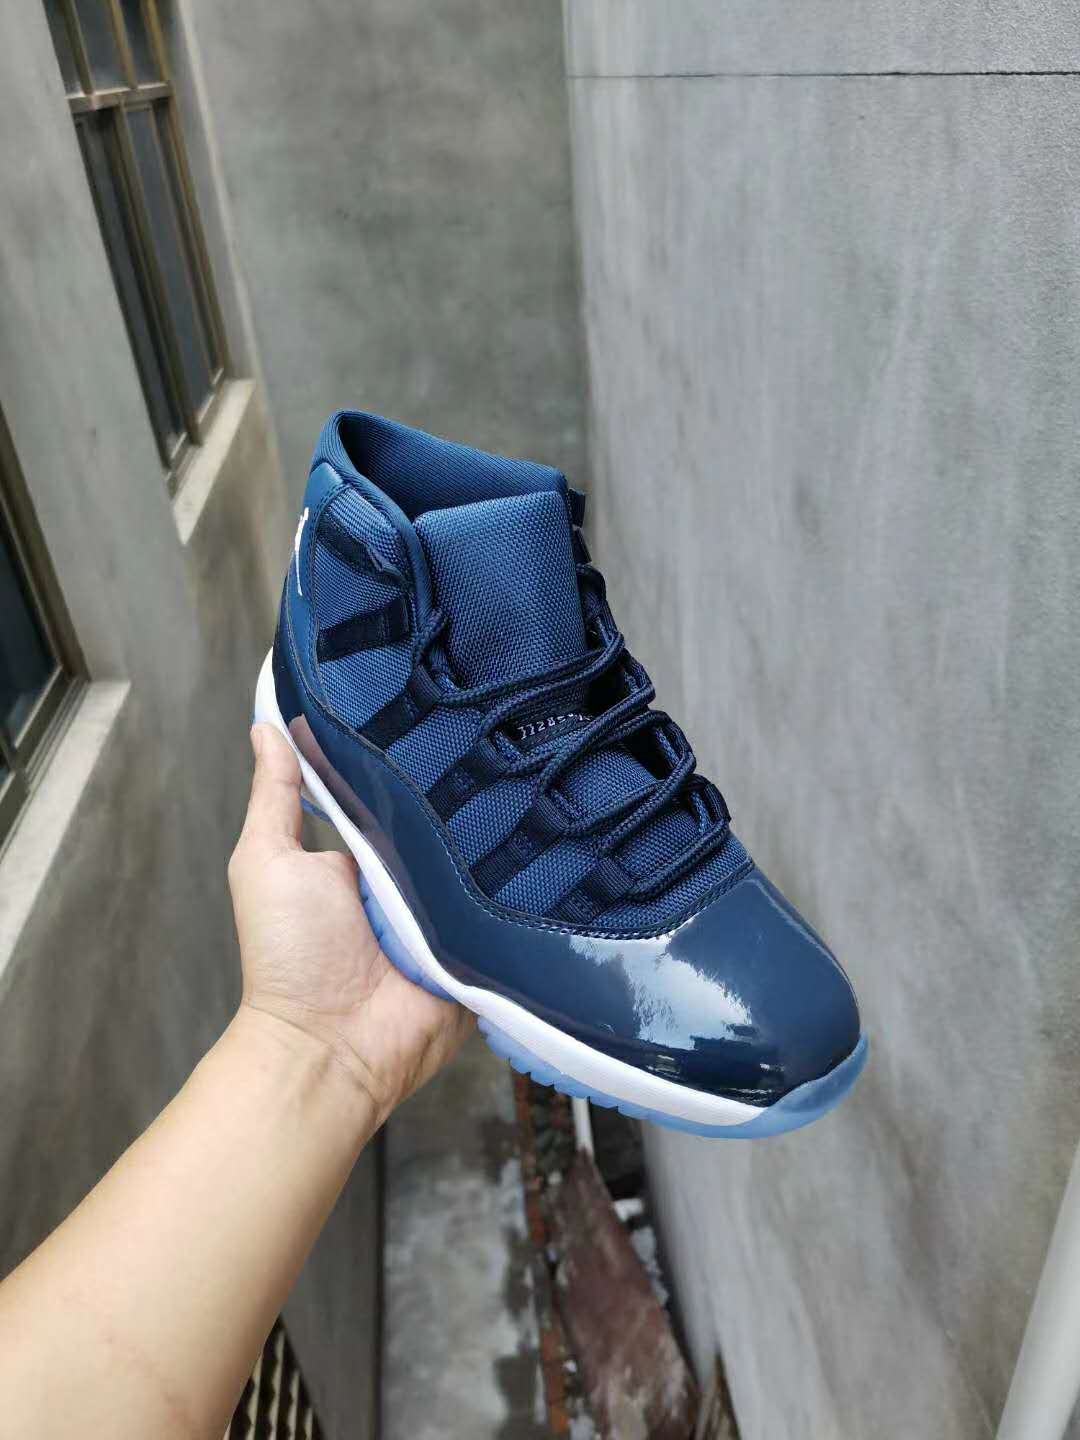 New Men Air Jordan 11 Retro Navy Blue Shoes